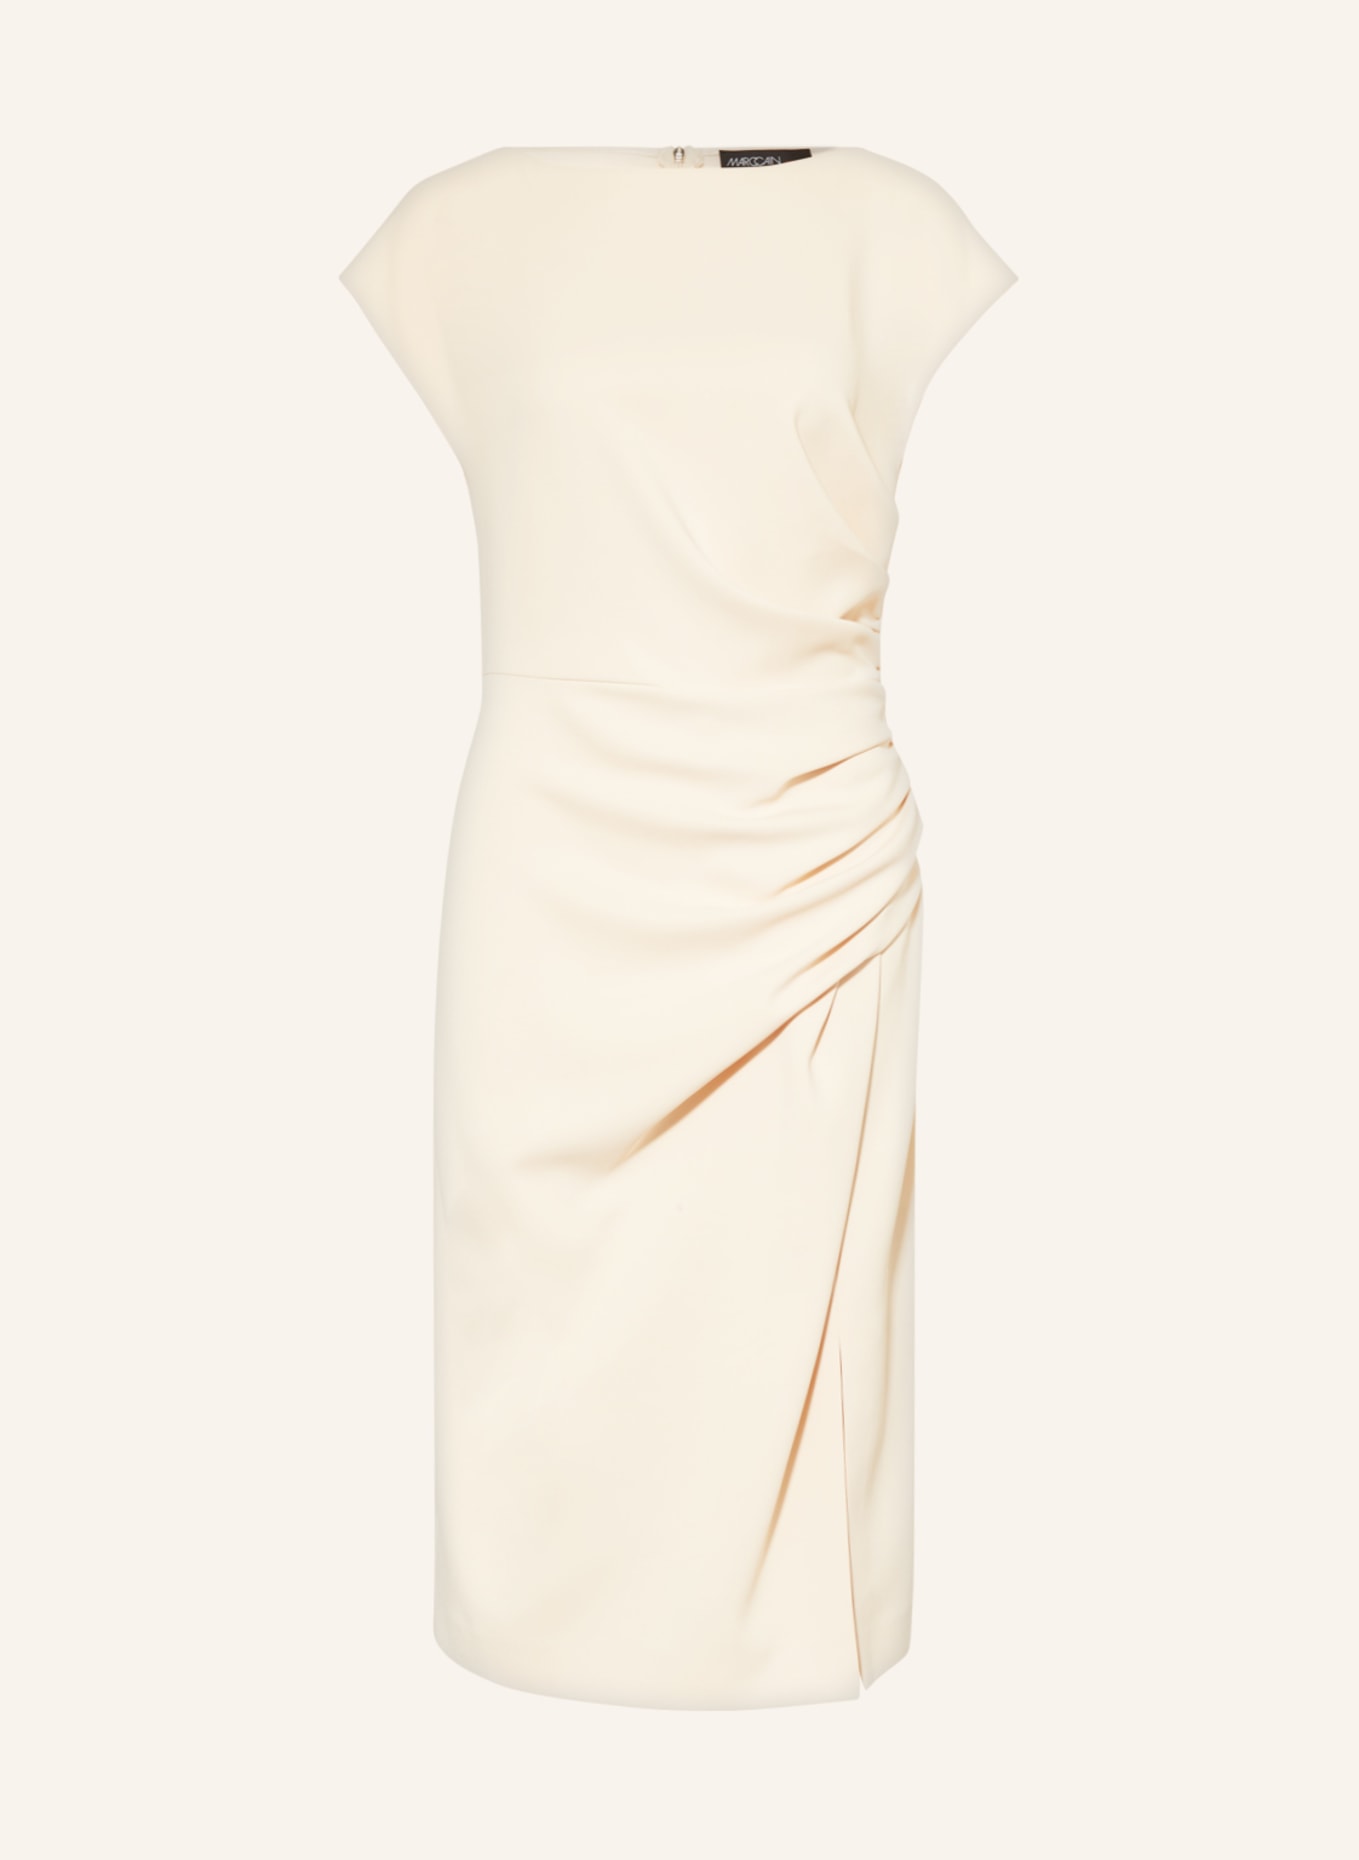 MARC CAIN Kleid, Farbe: 132 dark cream (Bild 1)